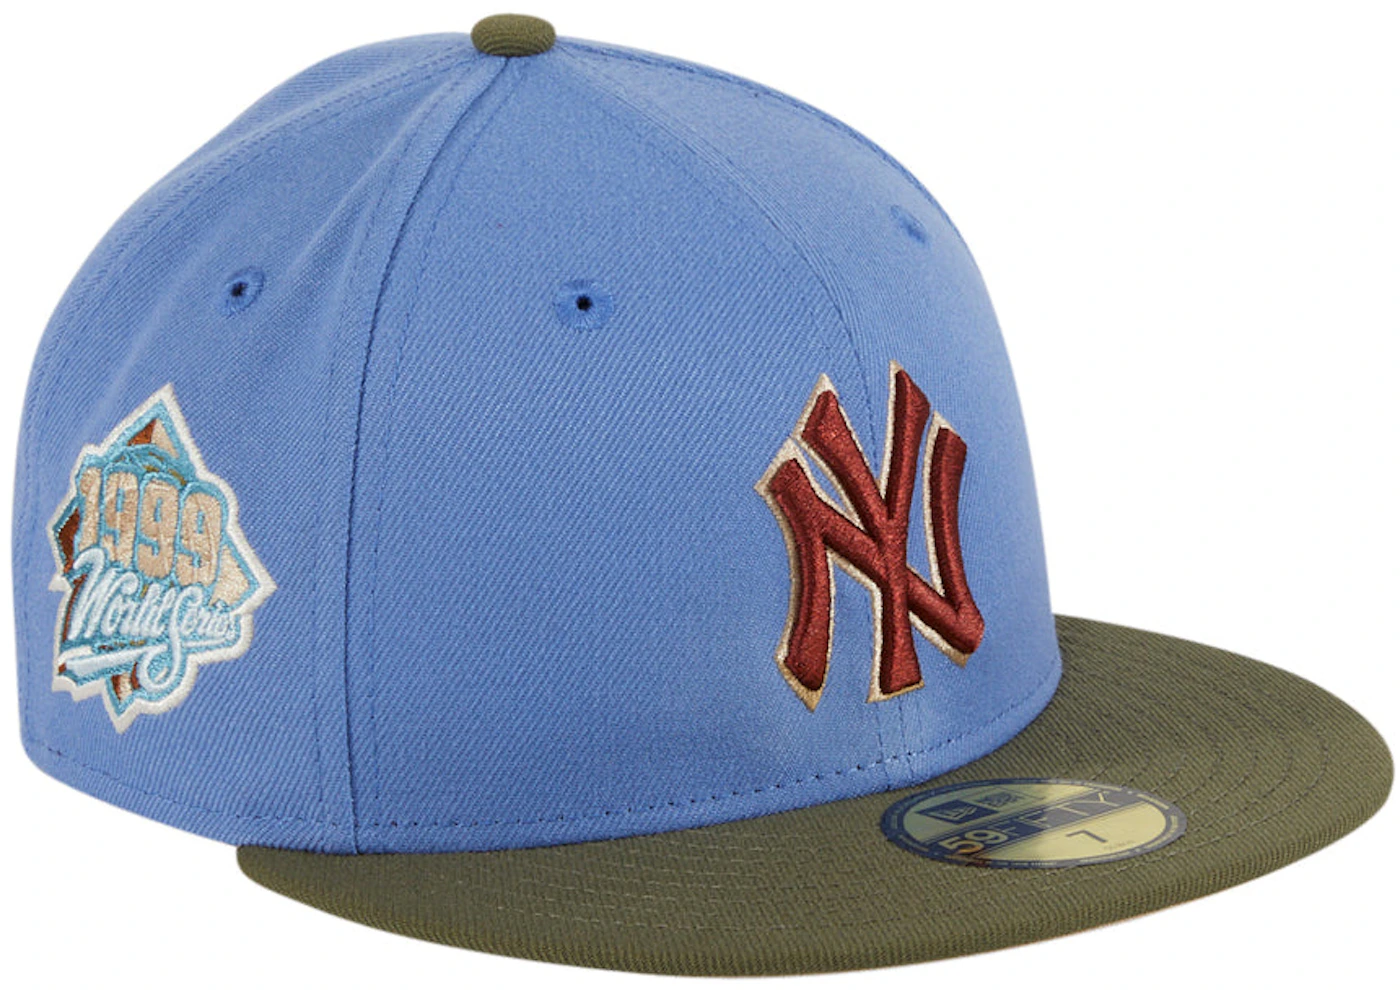  New Era Men's New York Yankees : New Era: Sports & Outdoors